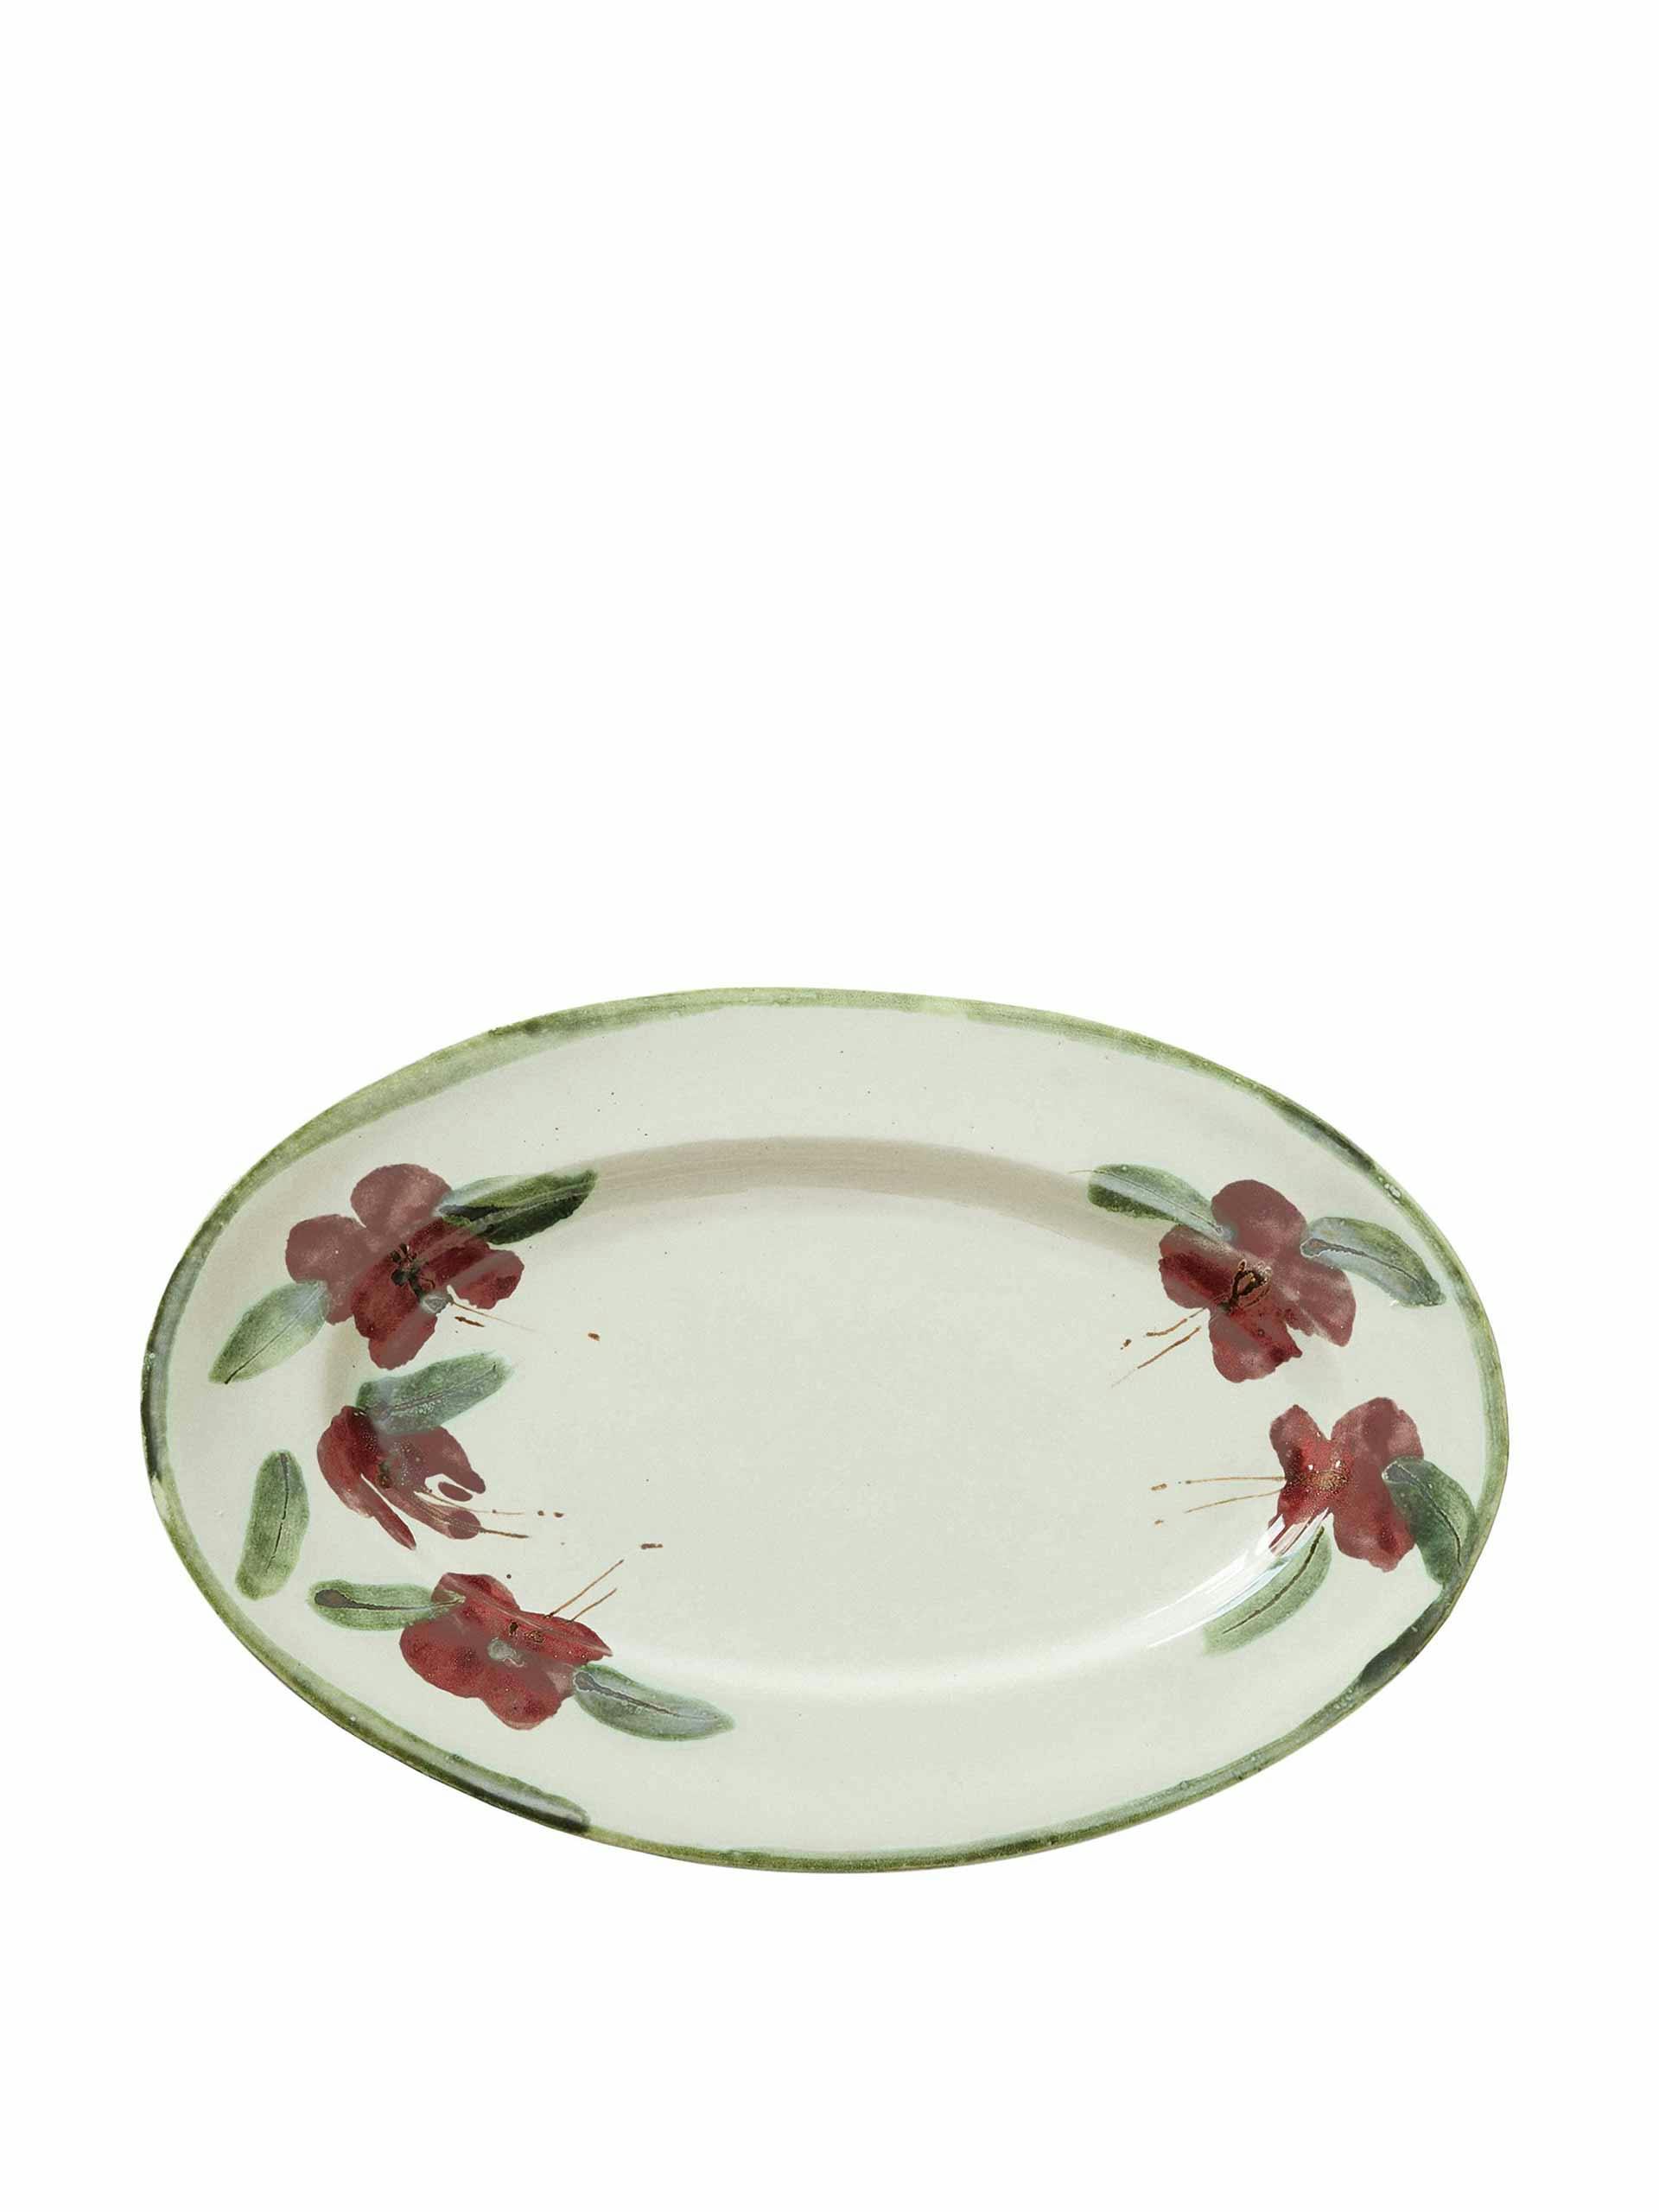 Handmade ceramic platter